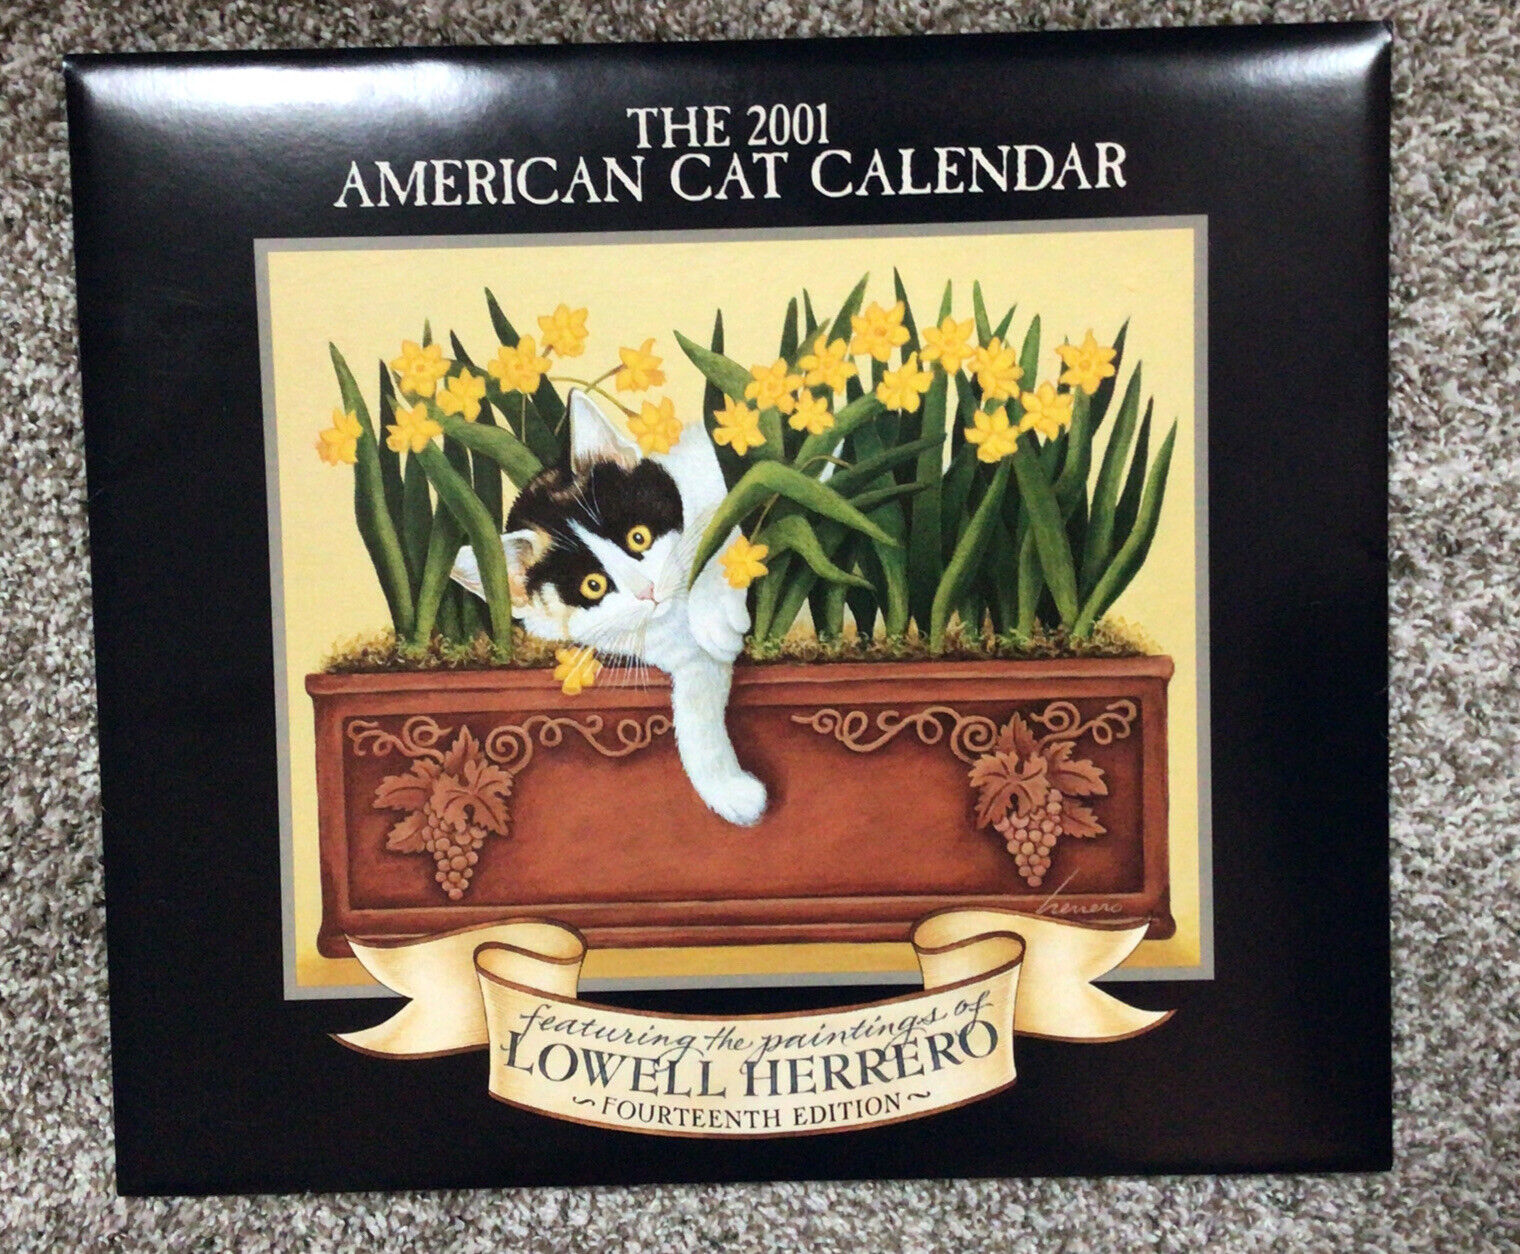 2001 American Cat Calendar Featuring Paintings of Lowell Herrero Lang Graphics